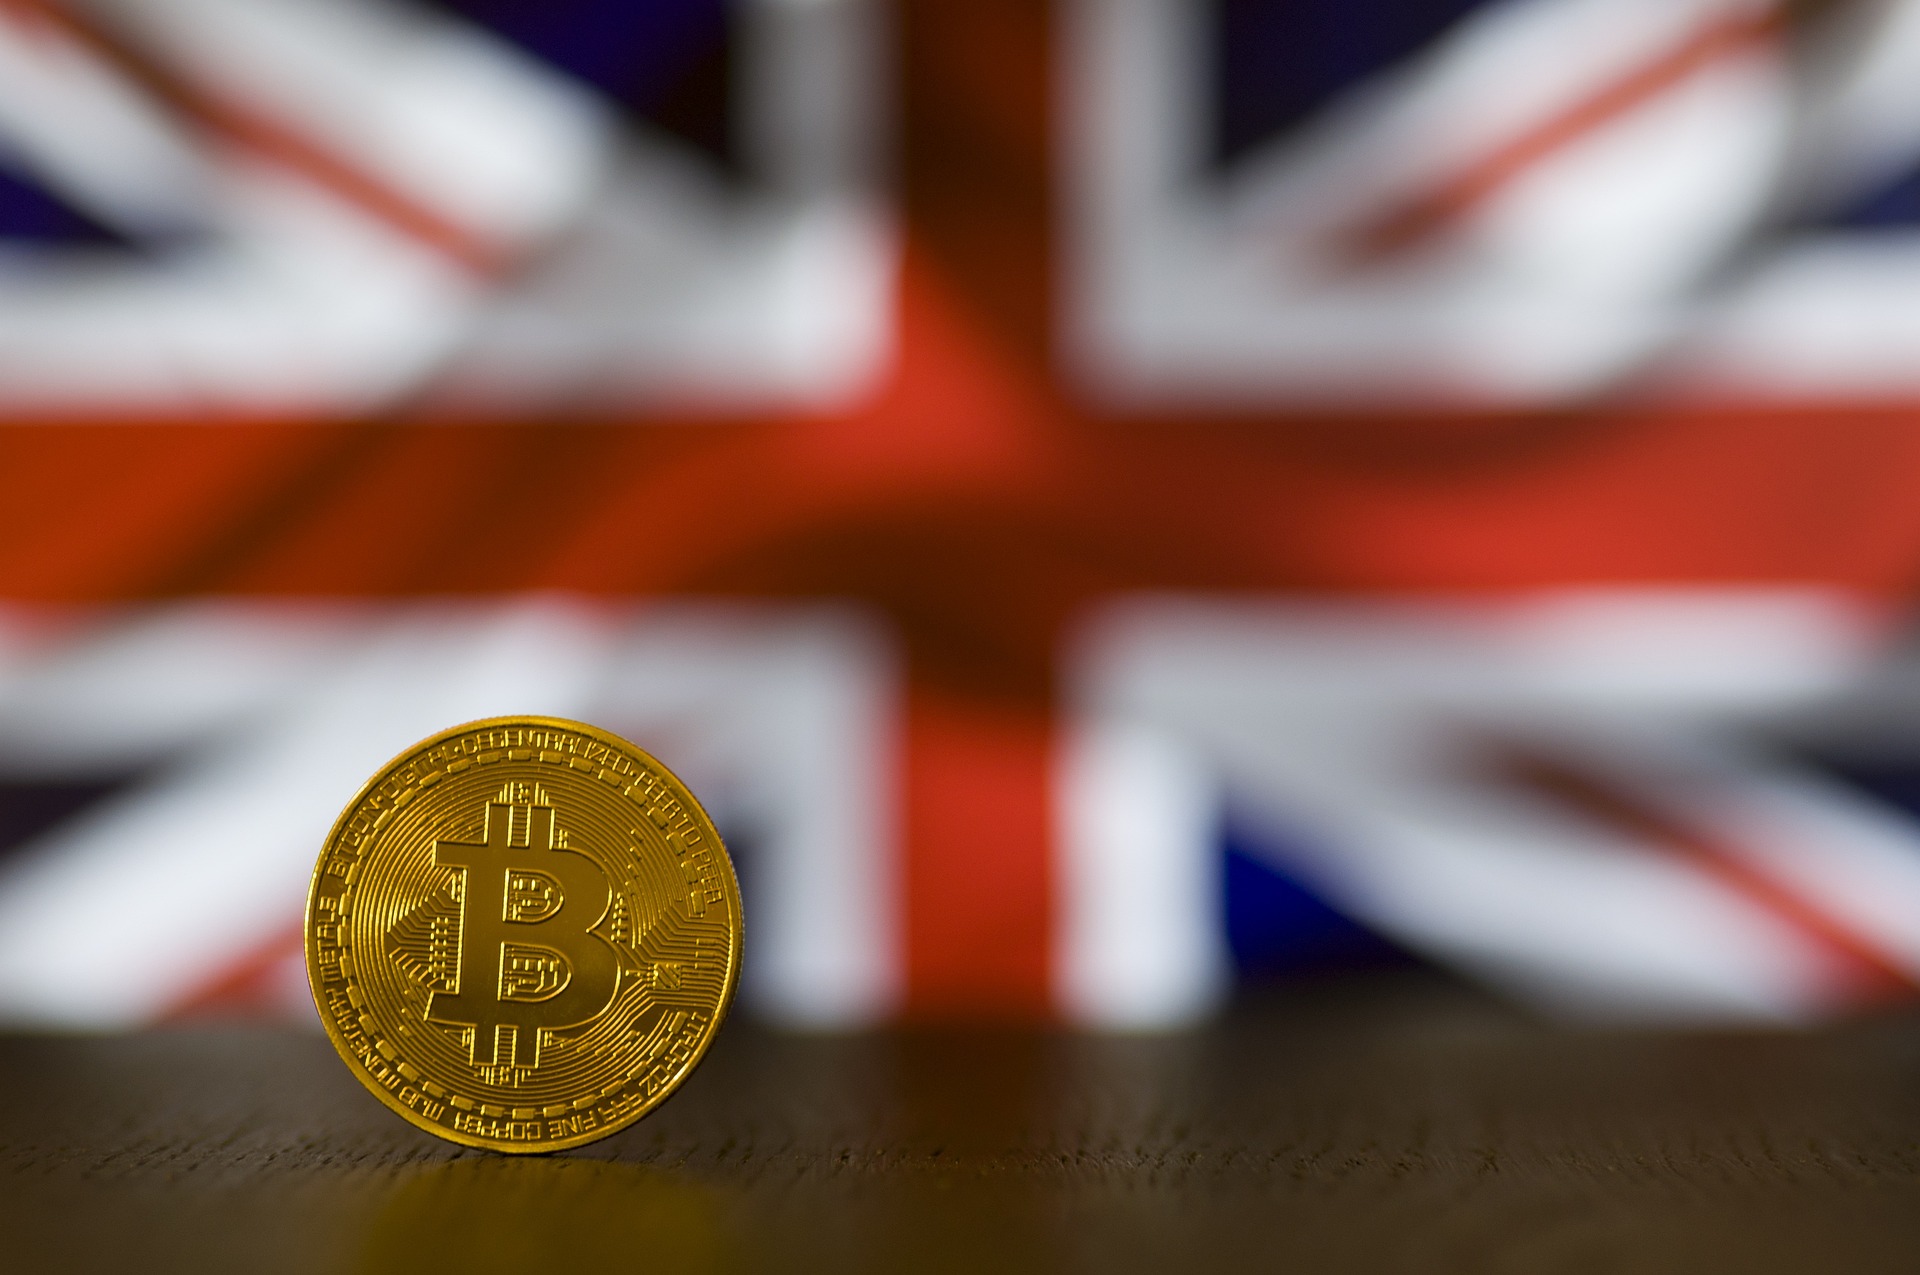 Will uk become a global crypto hub?